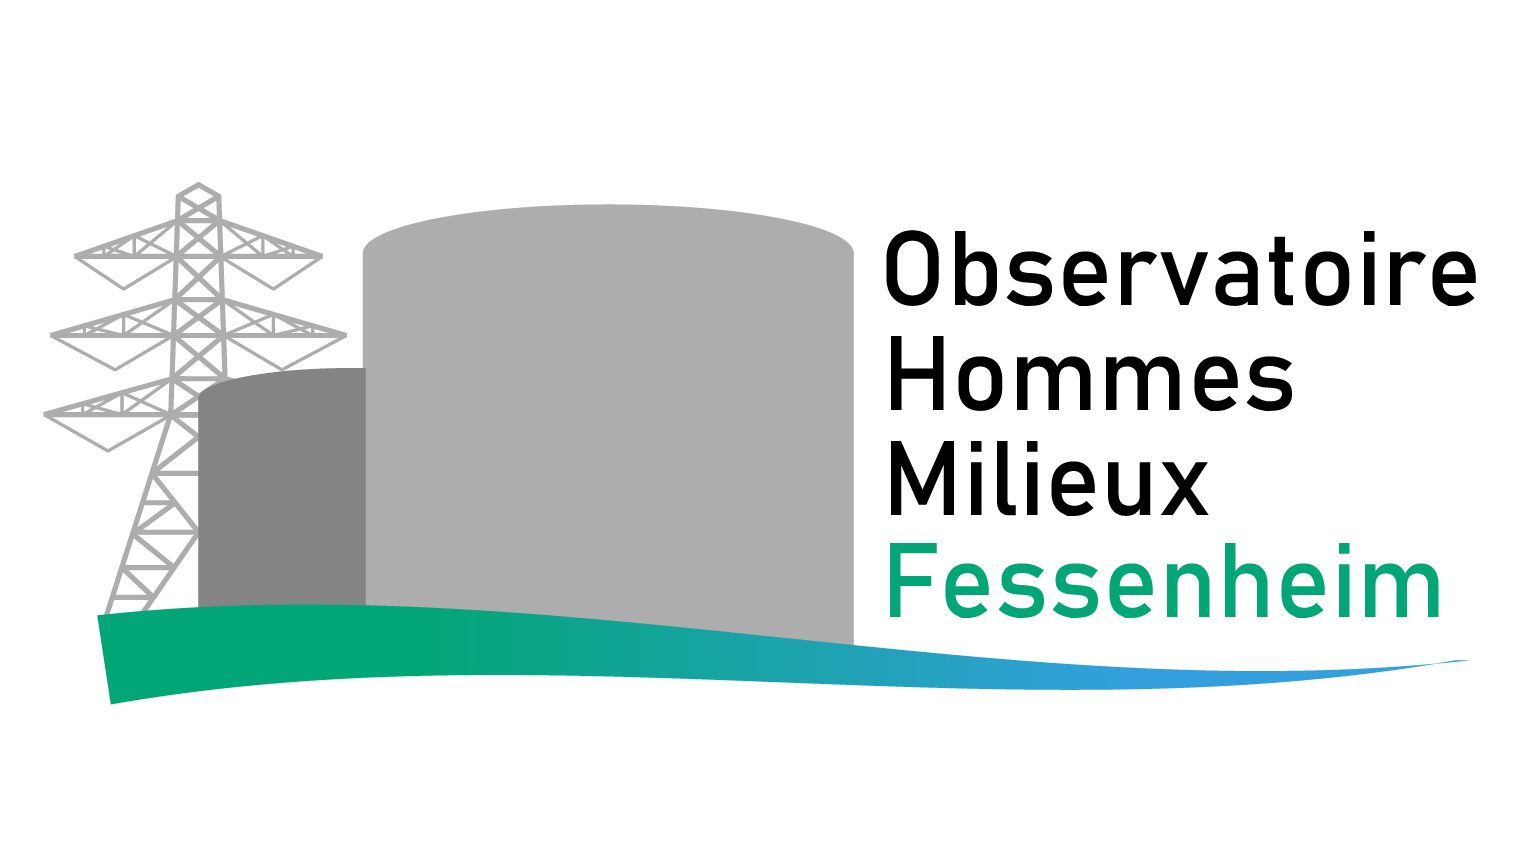 Observatoire Hommes Milieux - Fessenheim